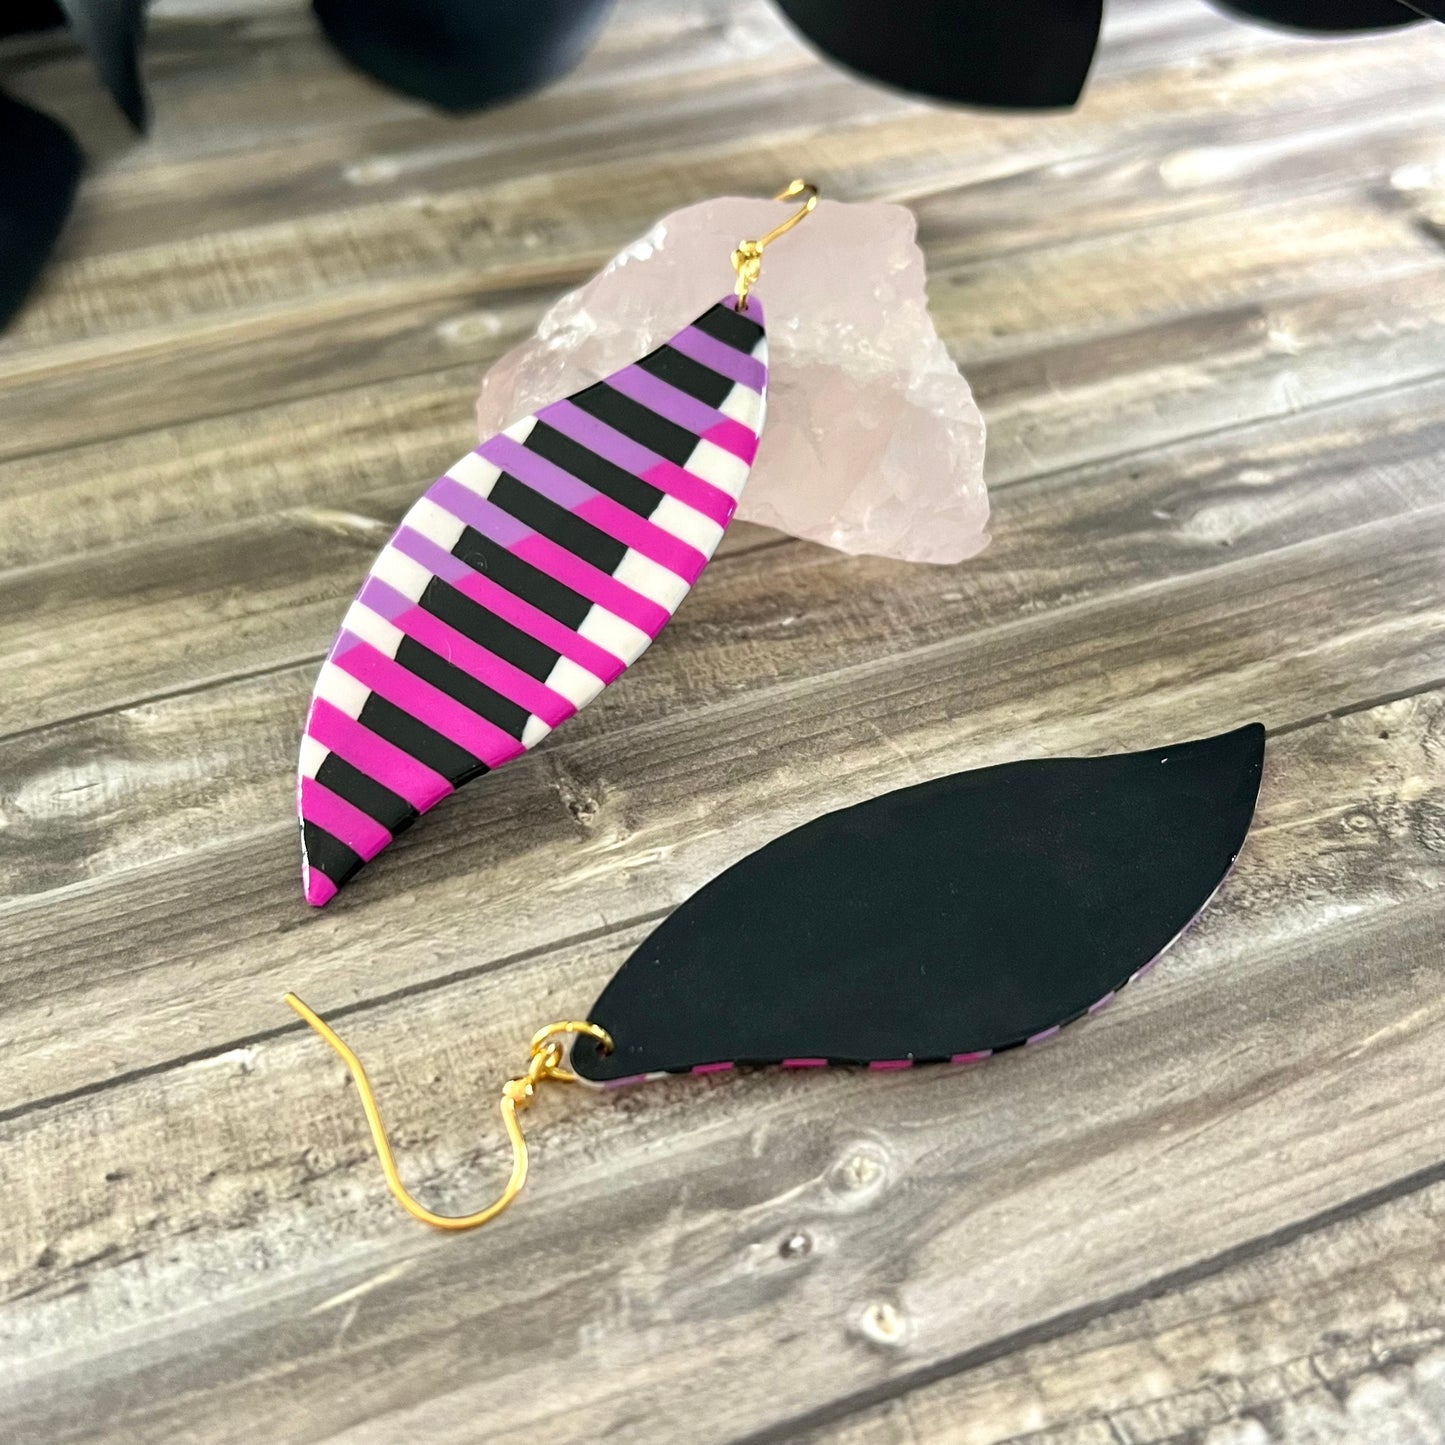 Extra large leaves, pink purple black white stripes, handmade earrings